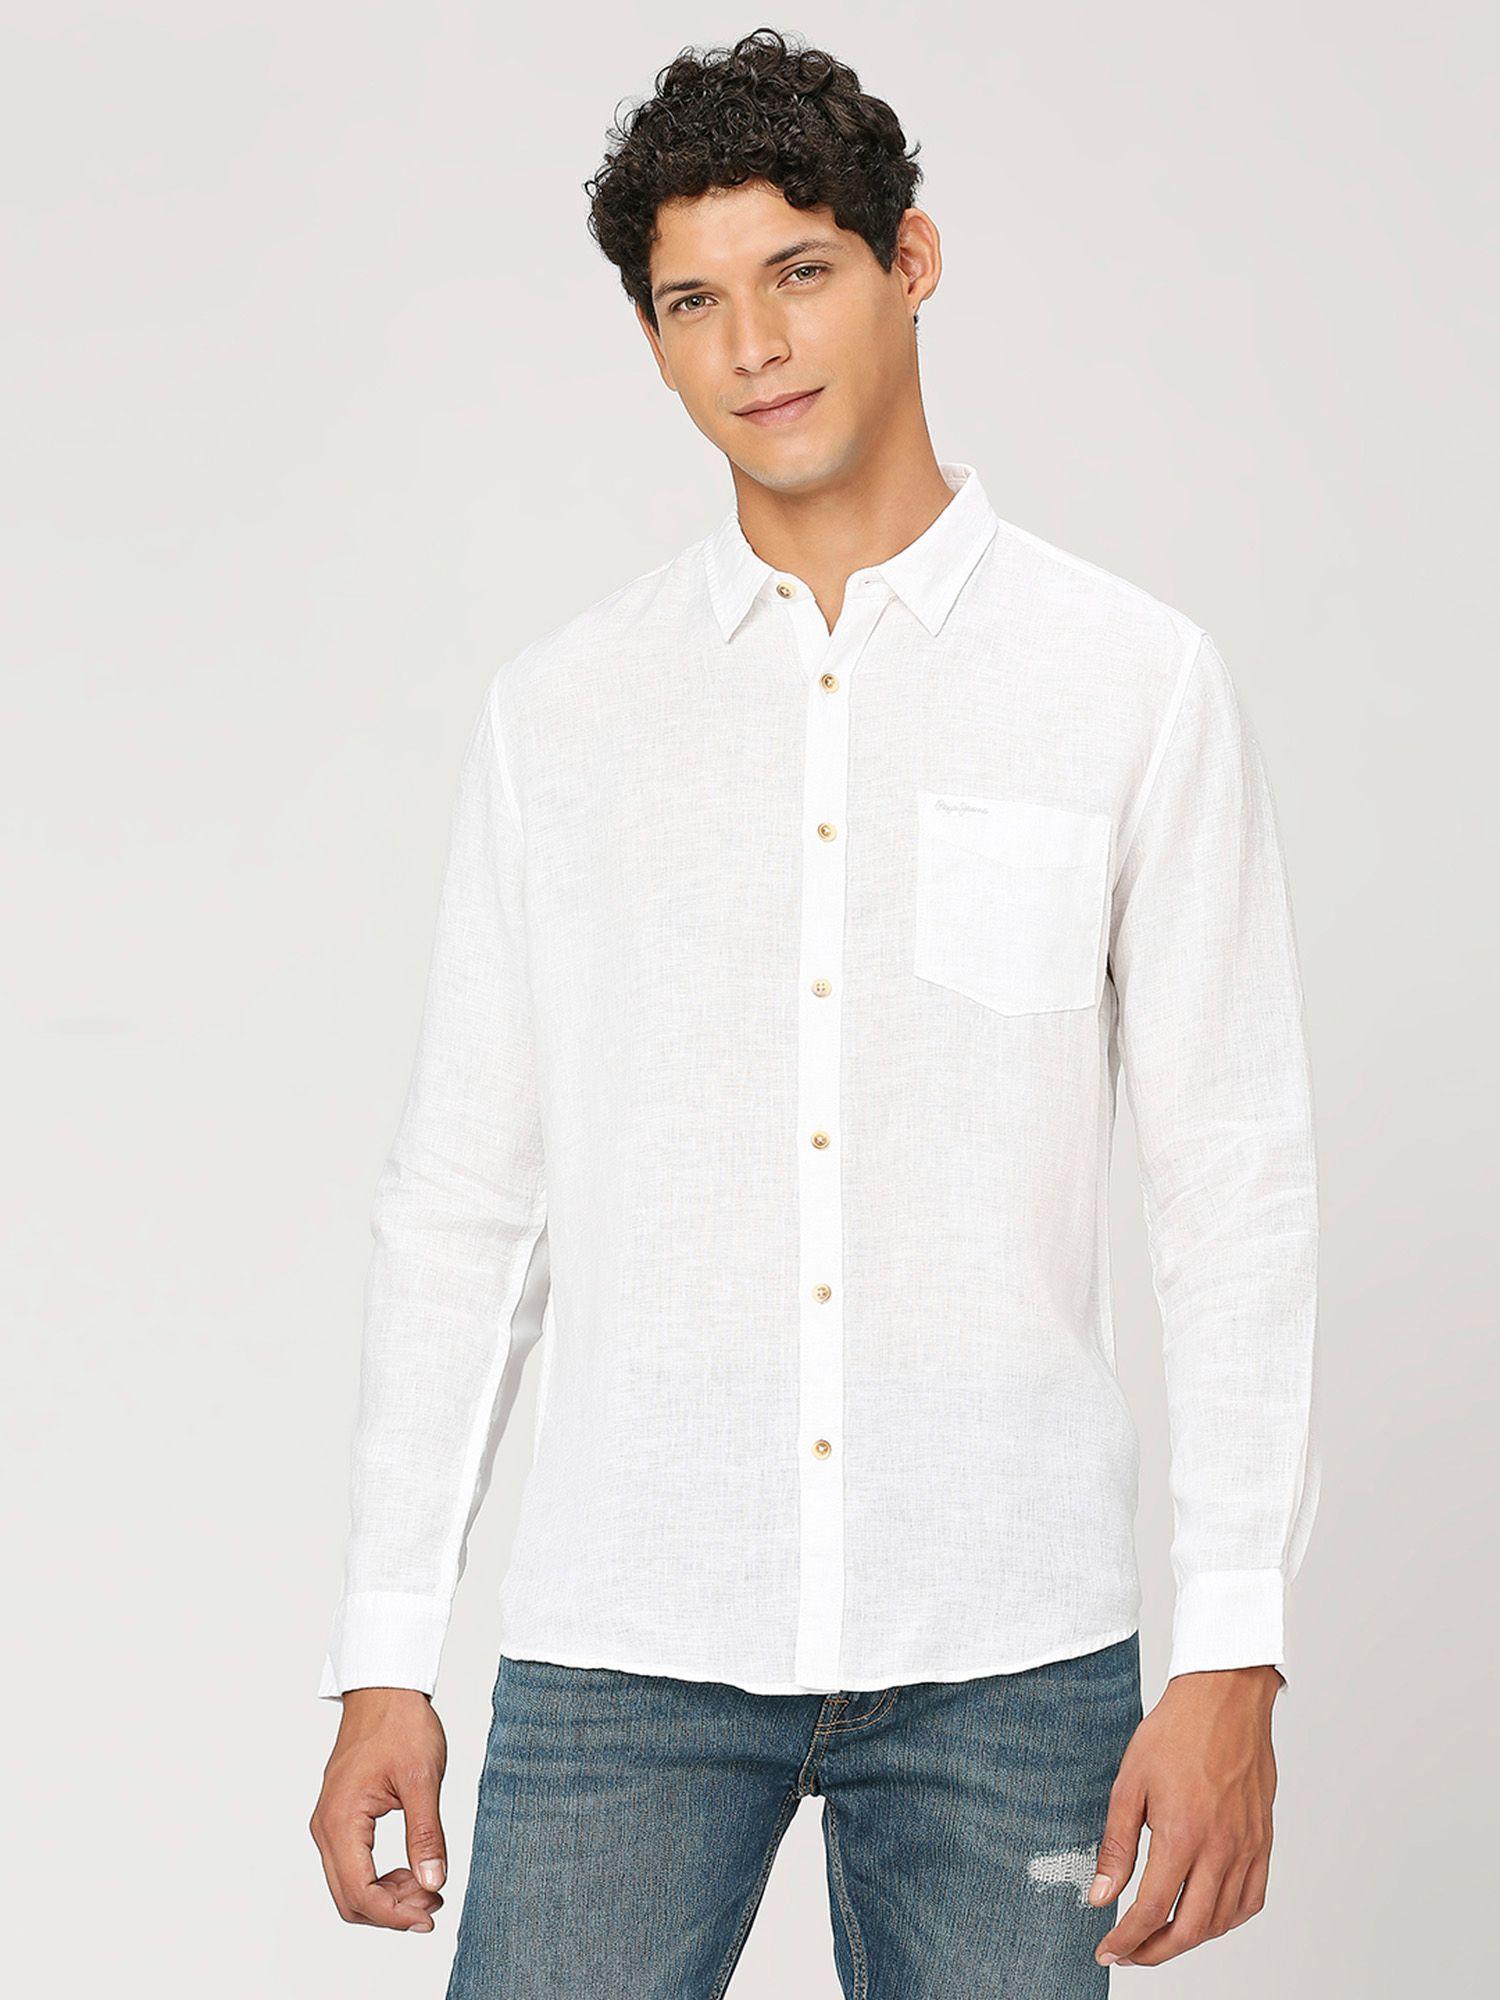 white-patch-pocket-full-sleeves-shirt